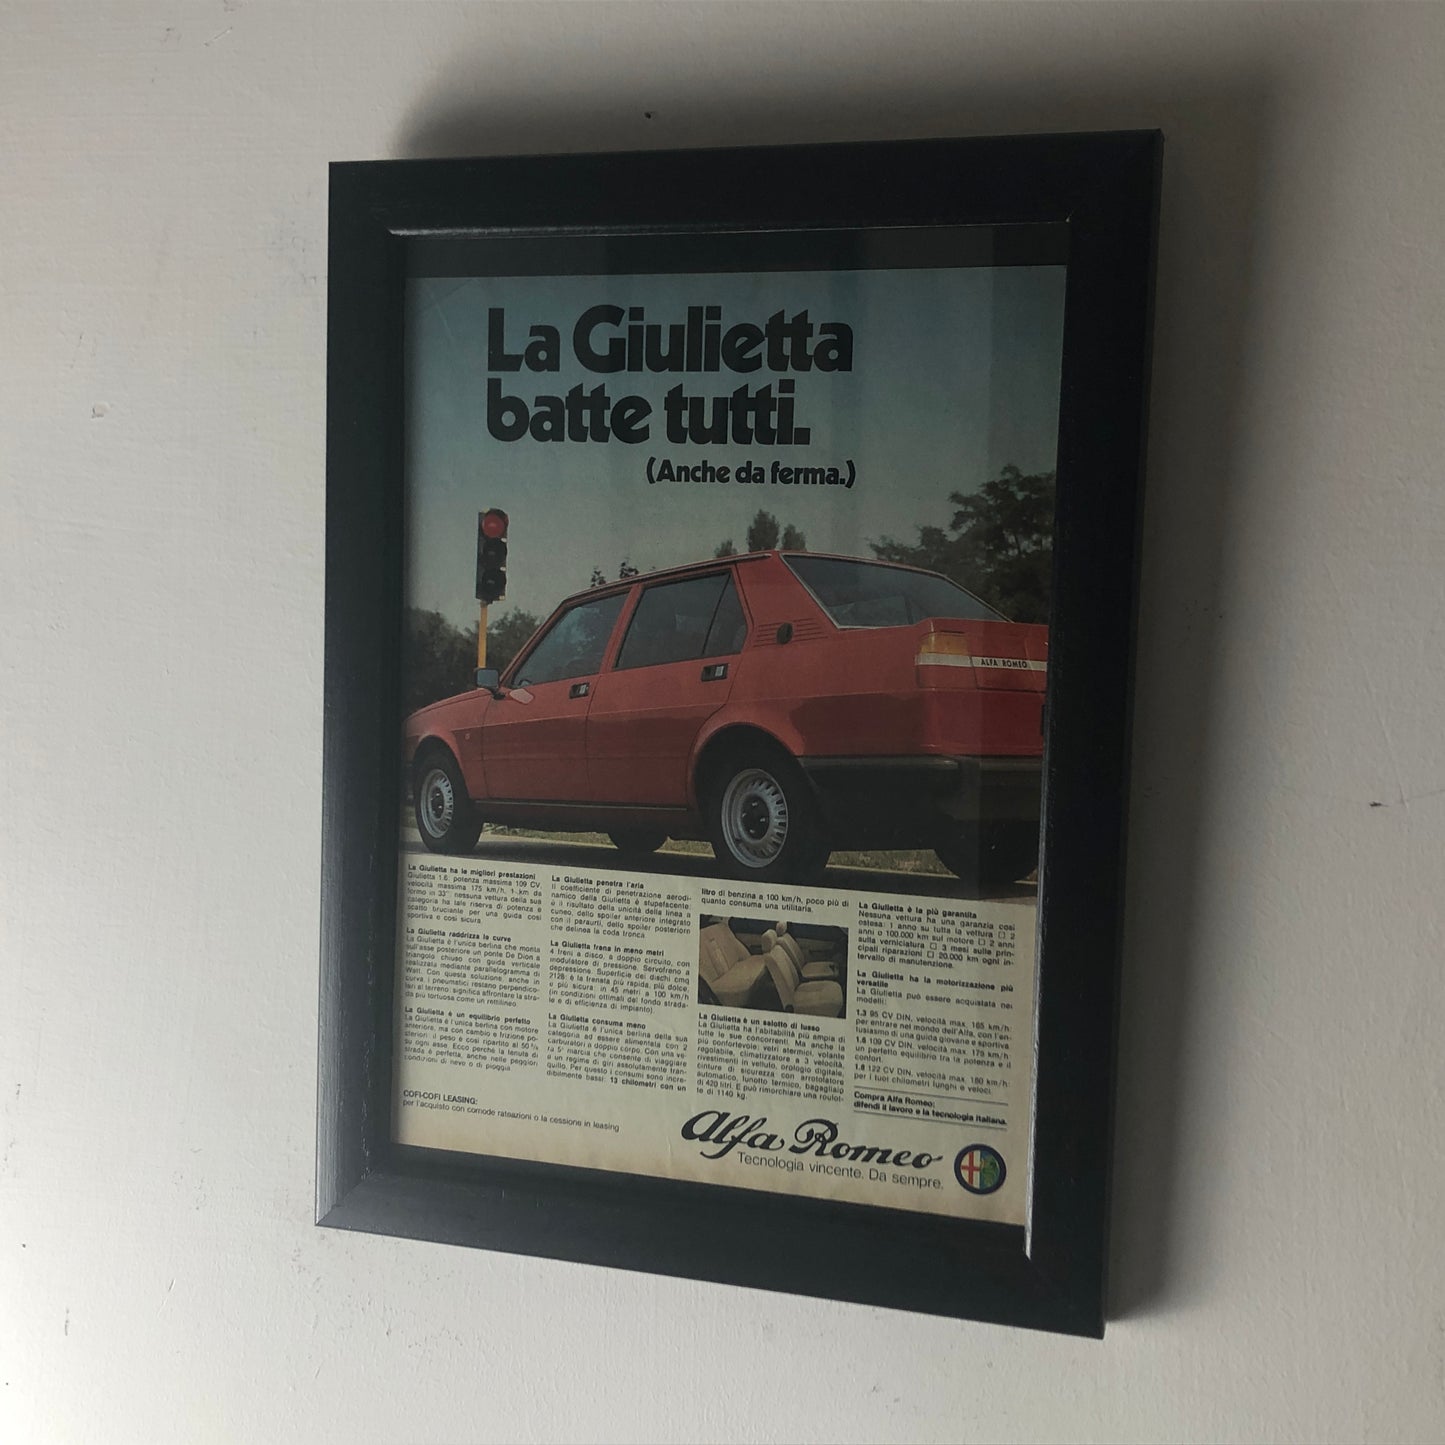 Alfa Romeo, Advertising Year 1981 the Giulietta Beats Everyone Even When Standstill